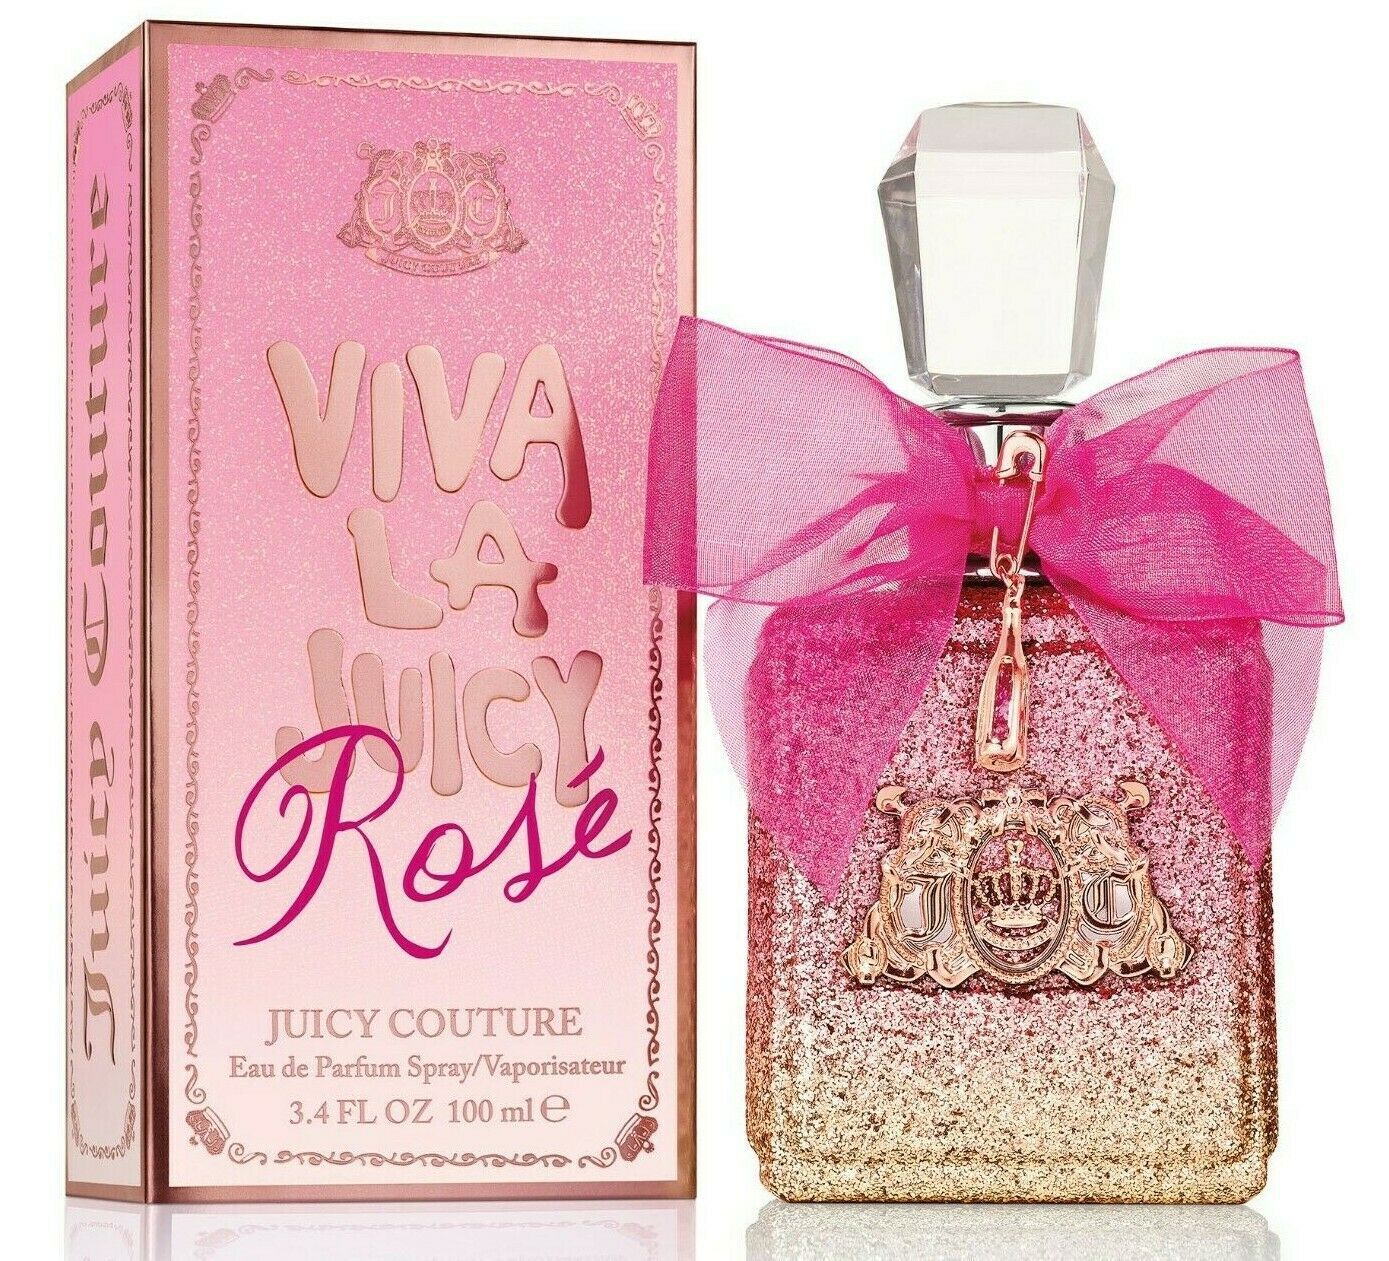 Juicy Couture Viva La Juicy Rose / EDP Spray 3.4 oz (100 ml)